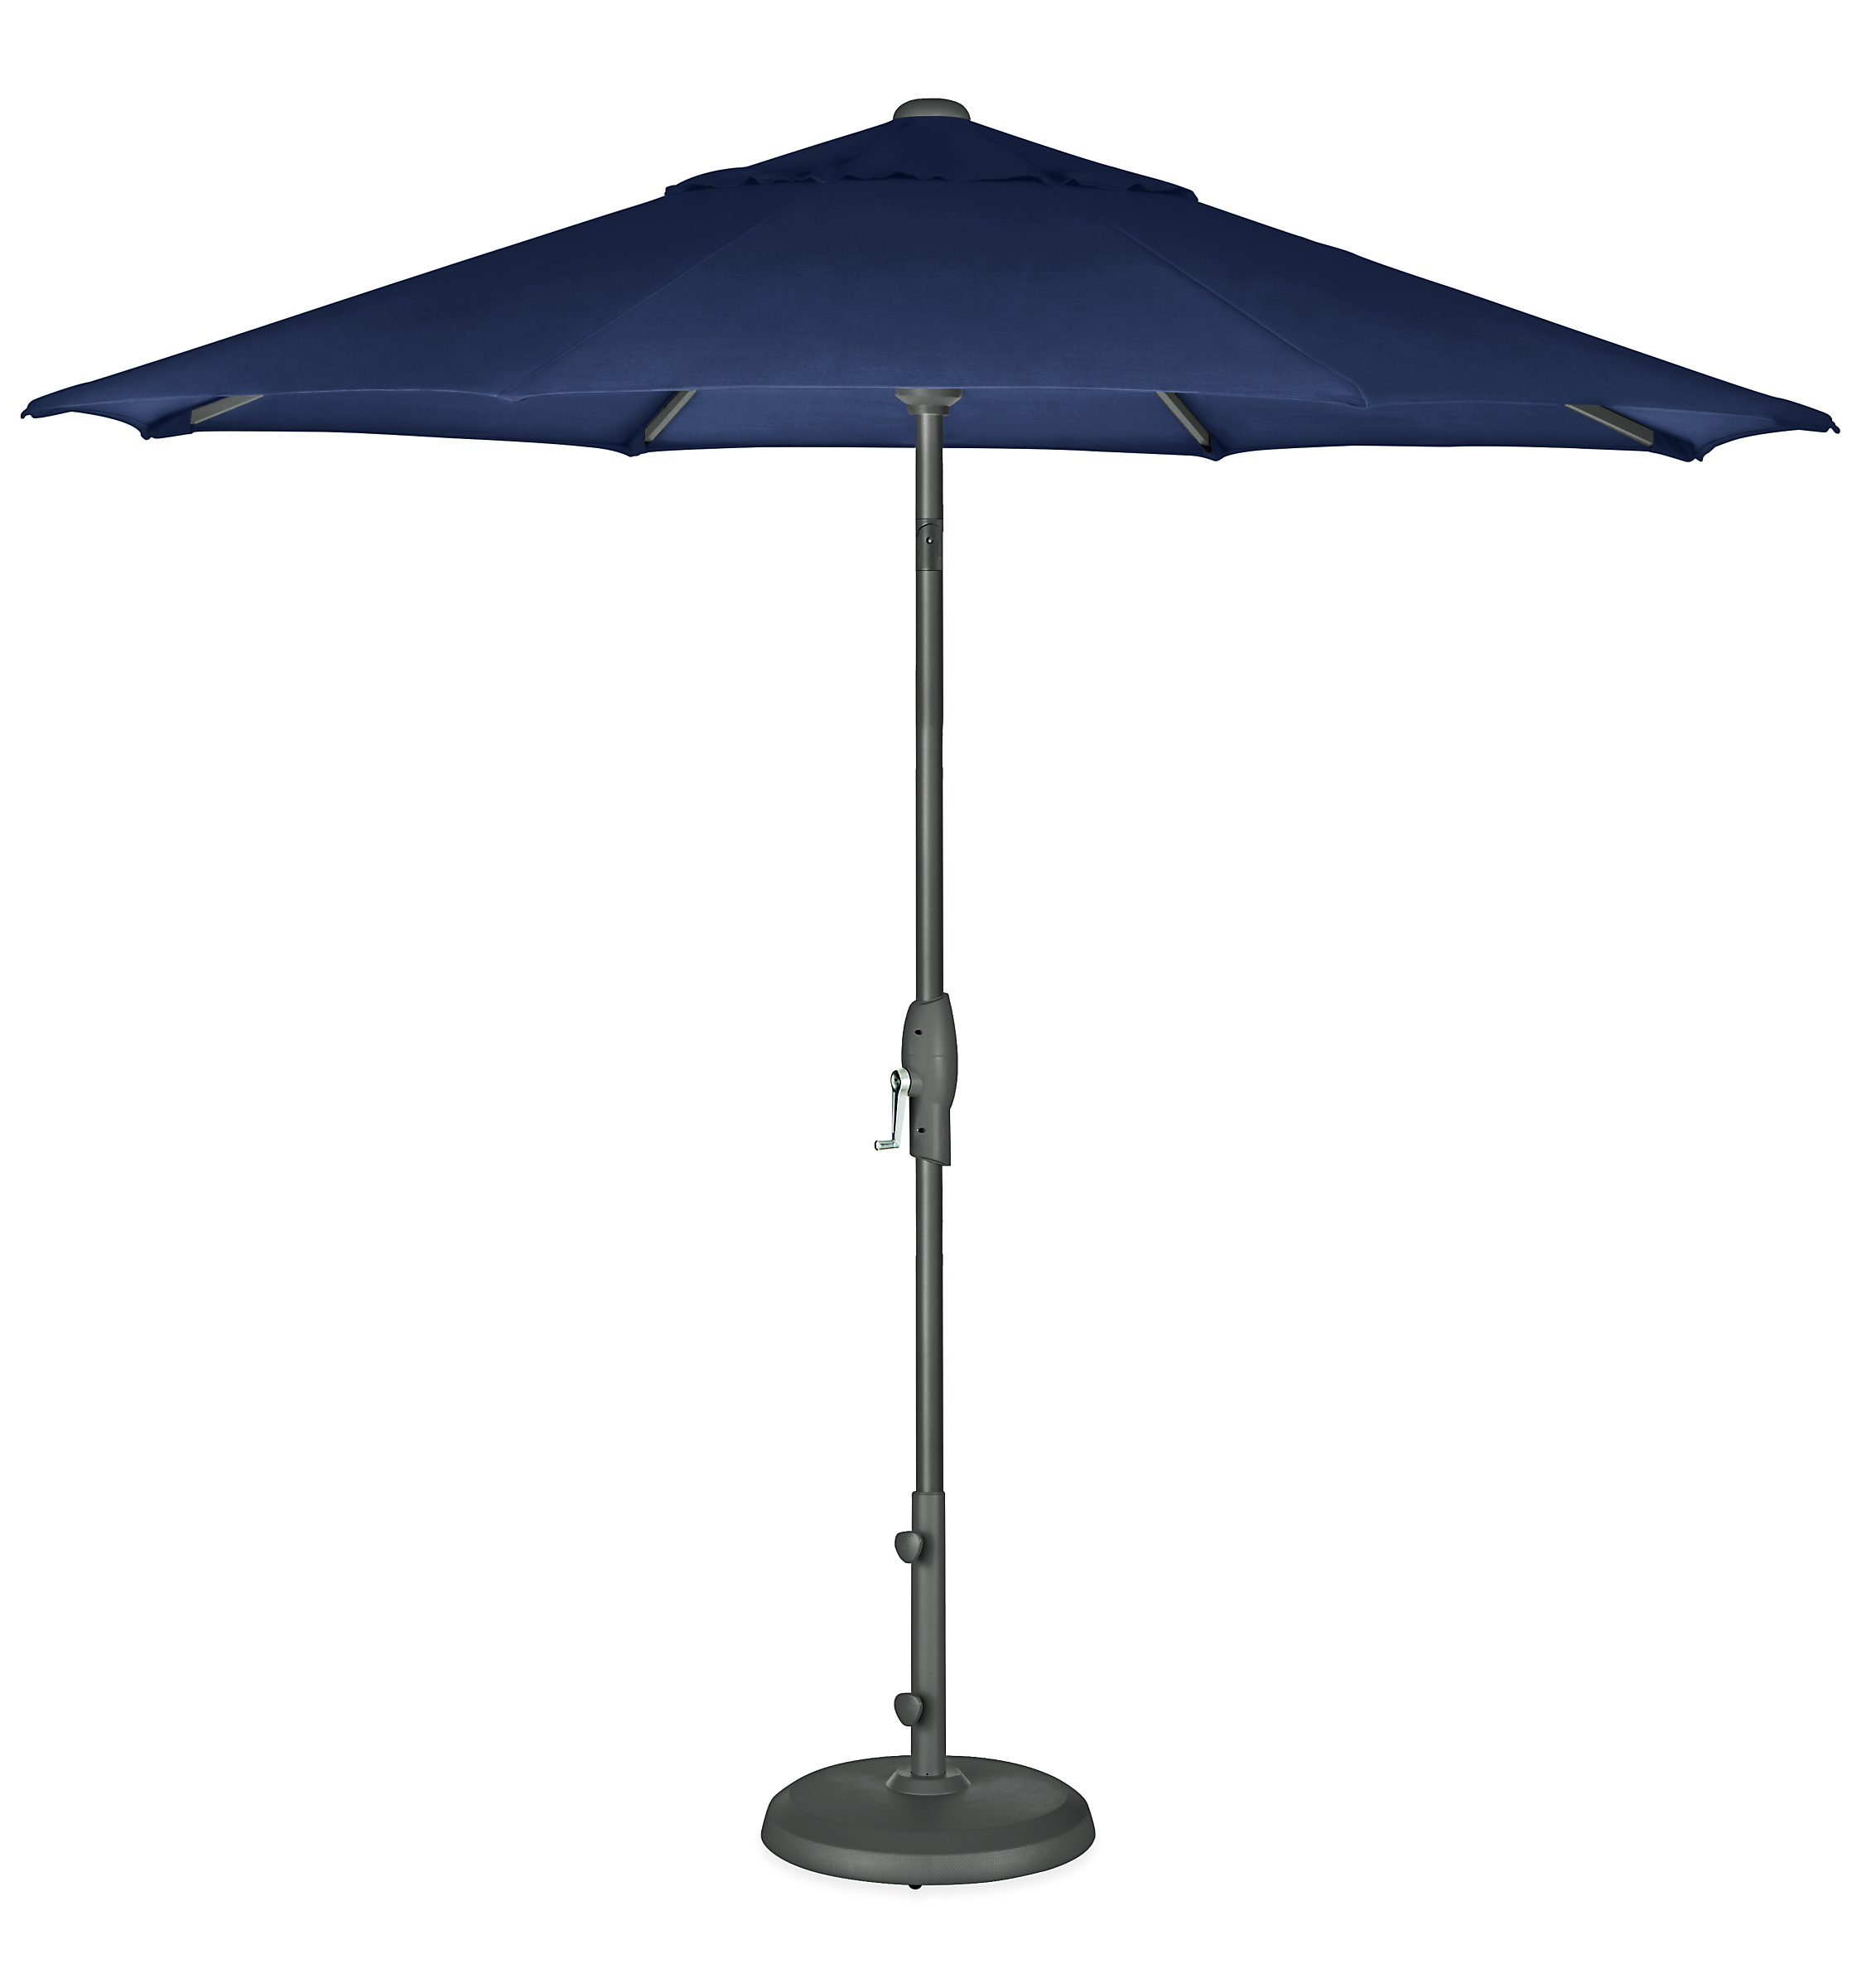 Oahu 9' Round Patio Umbrella in Sunbrella Canvas Navy with Graphite Base